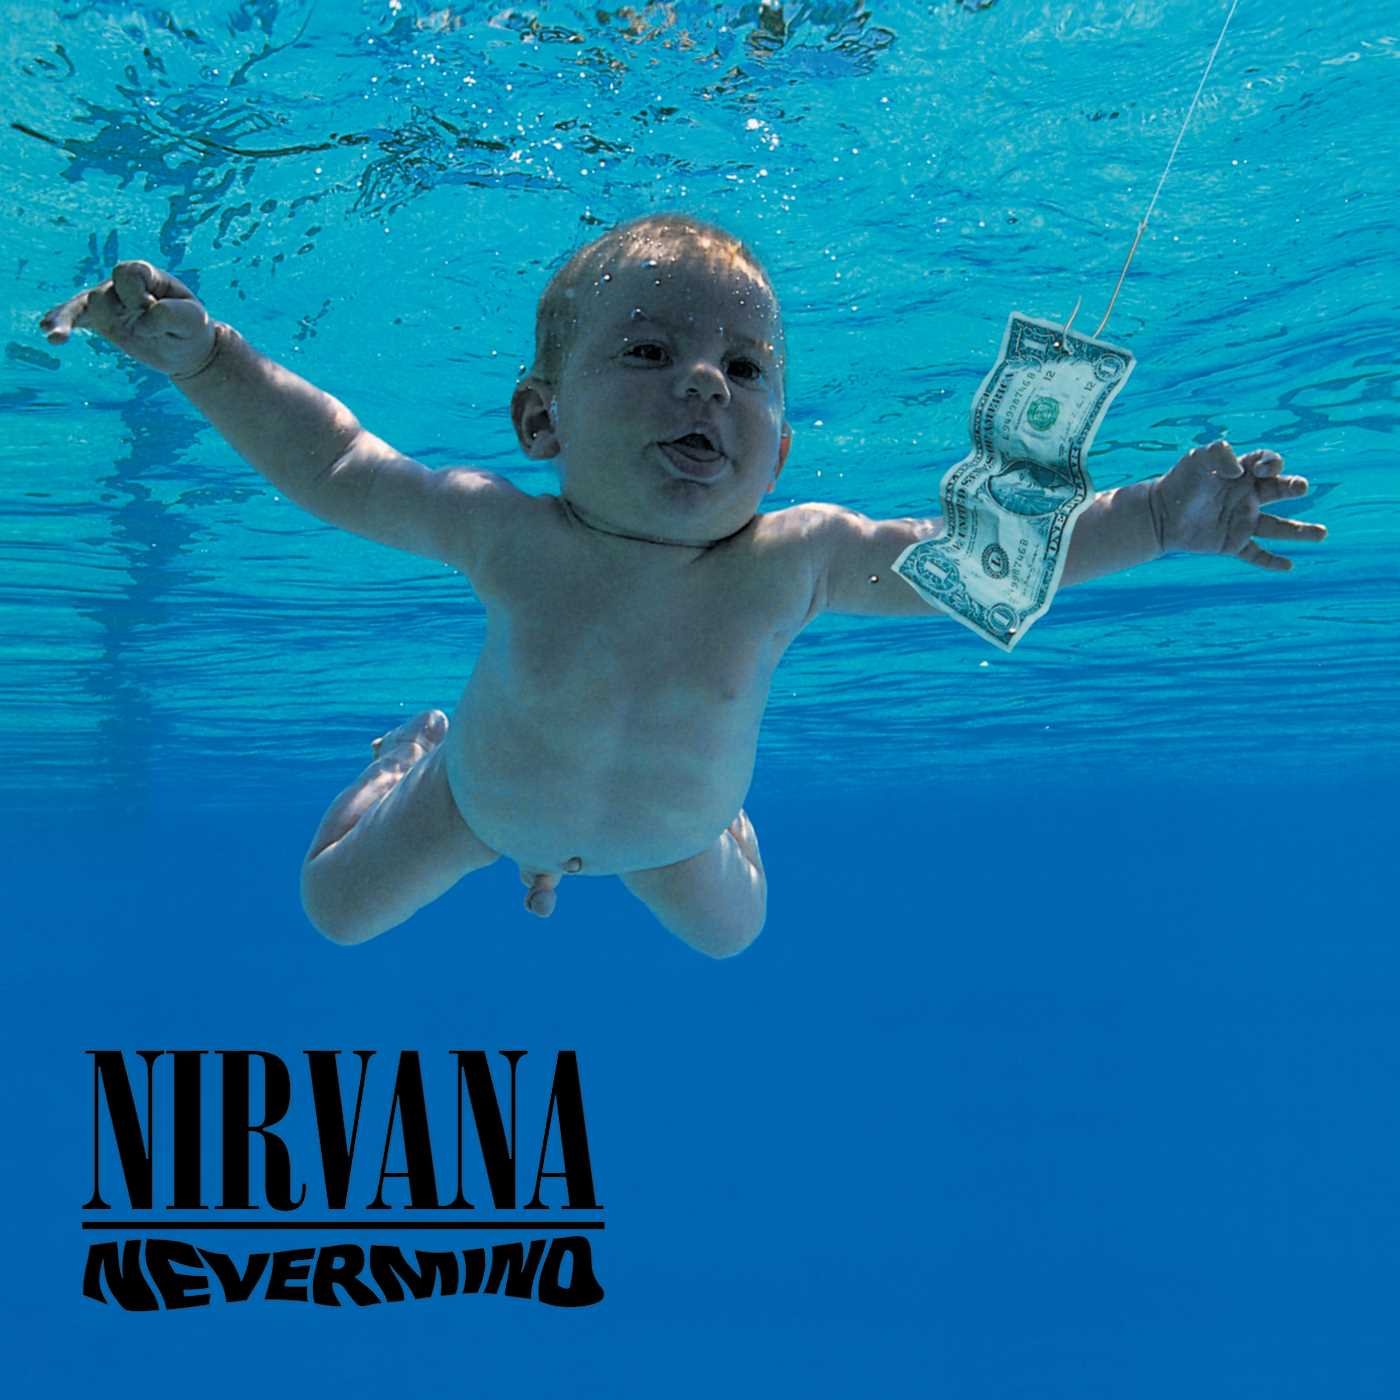 Nirvana "Nevermind" 30th Anniversary Lp+7" (180g, Gatefold)